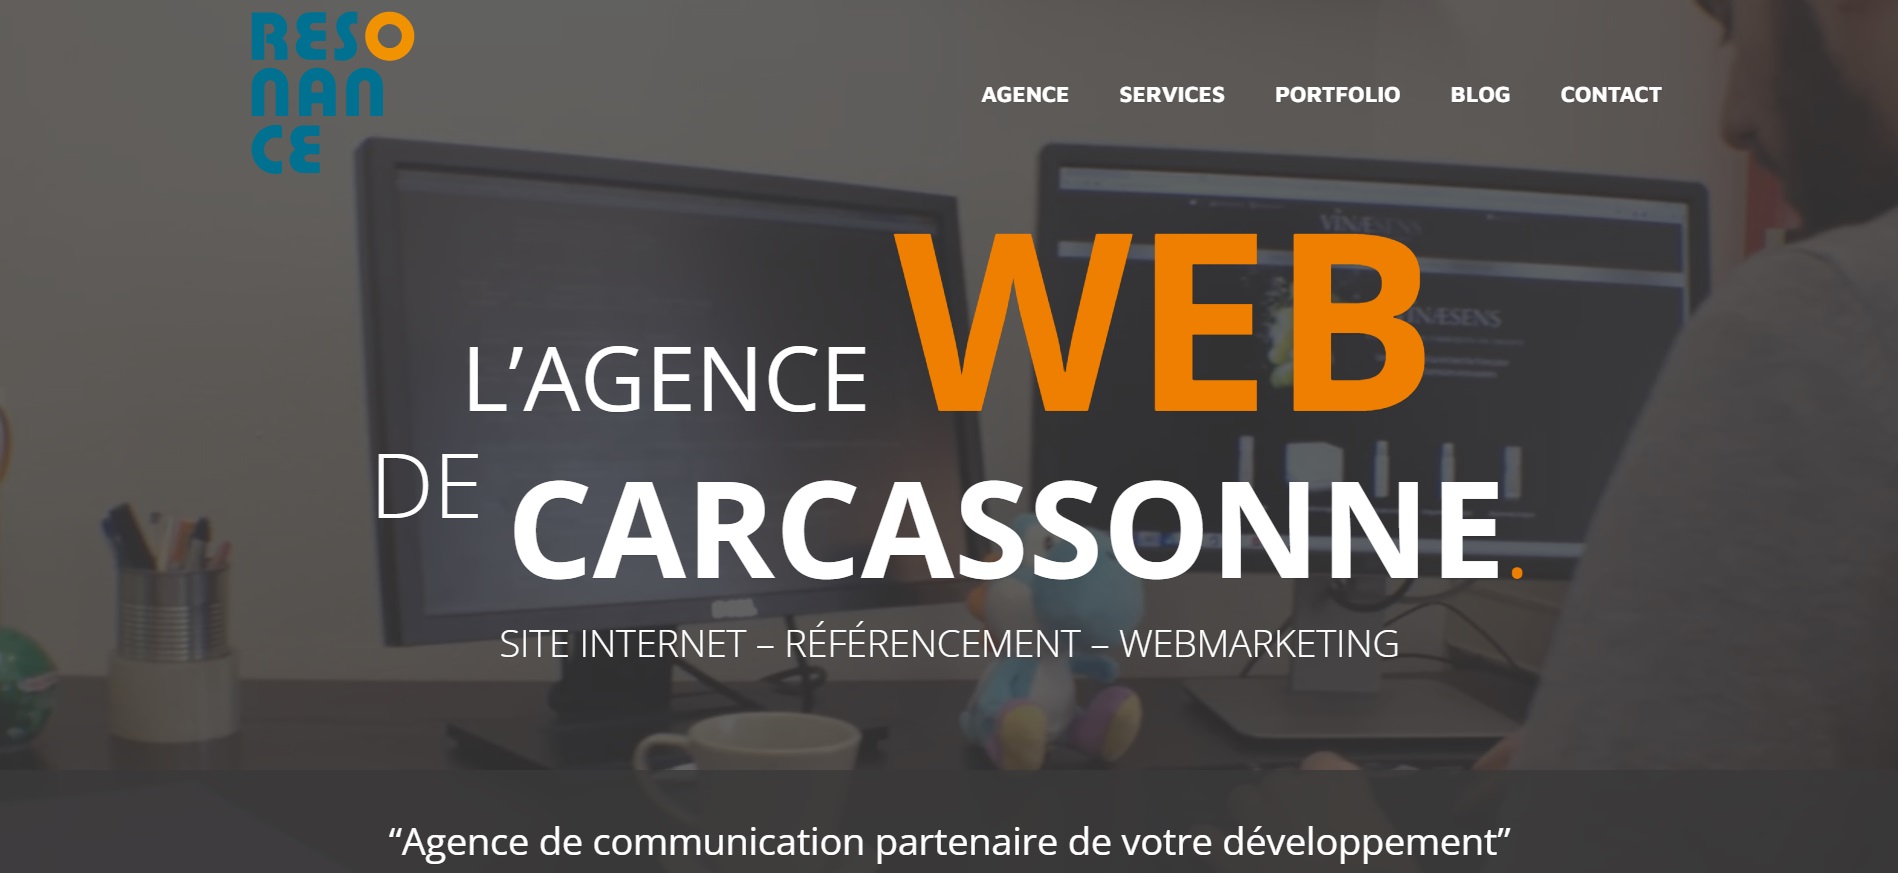 Resonance communication - Agence Web à Carcassonne